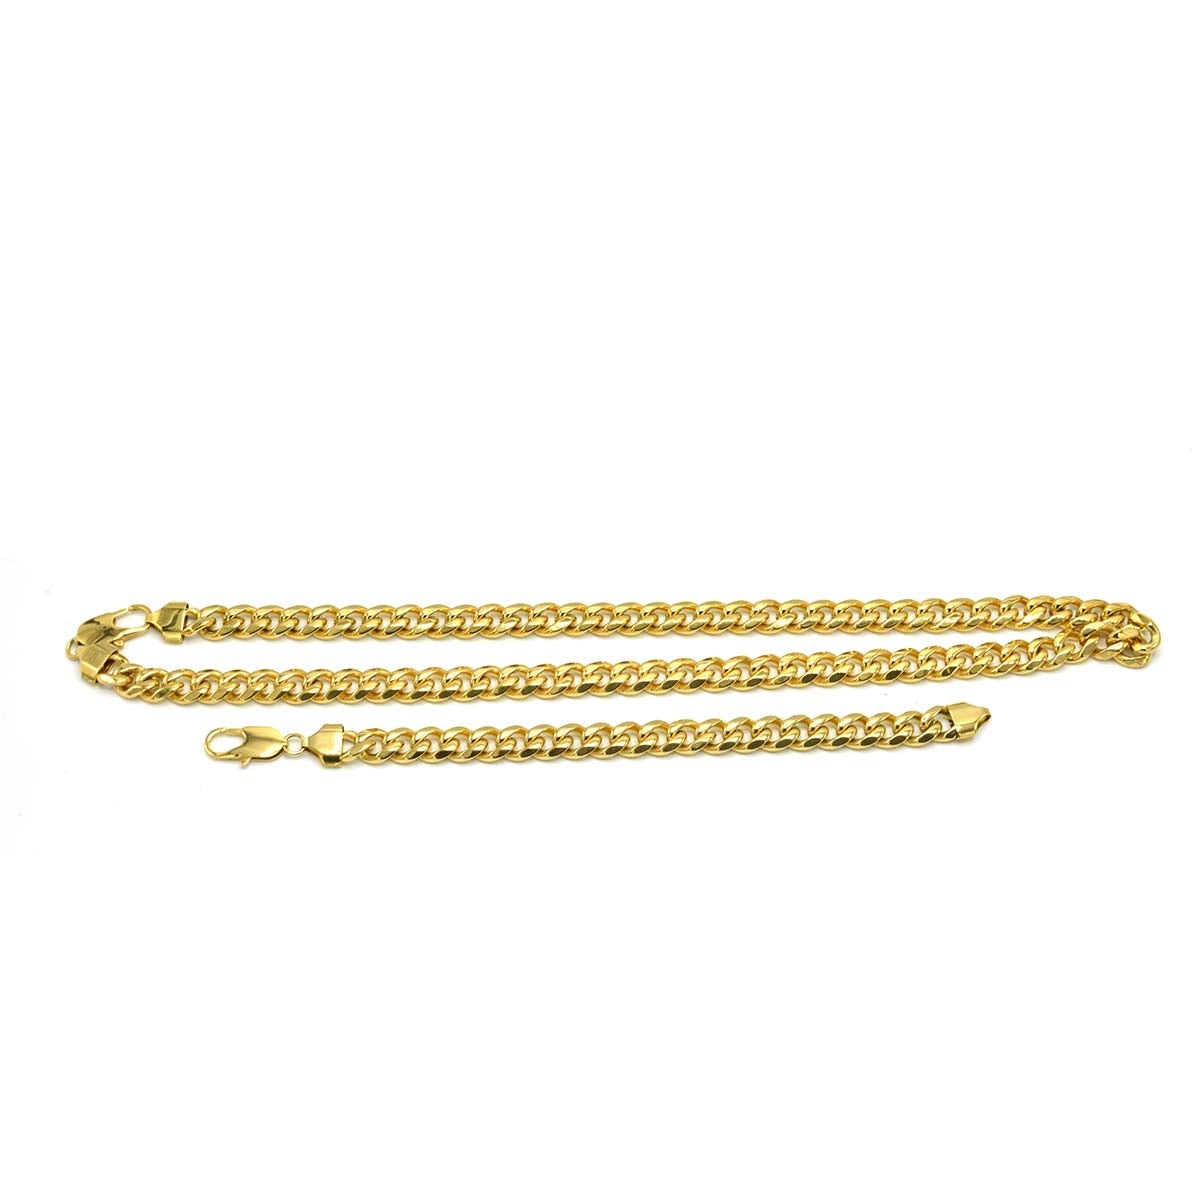 Stainless Steel Chain Bracelet Miami Cuban Set 13mm 24 inch chain 8.5 inch bracelet